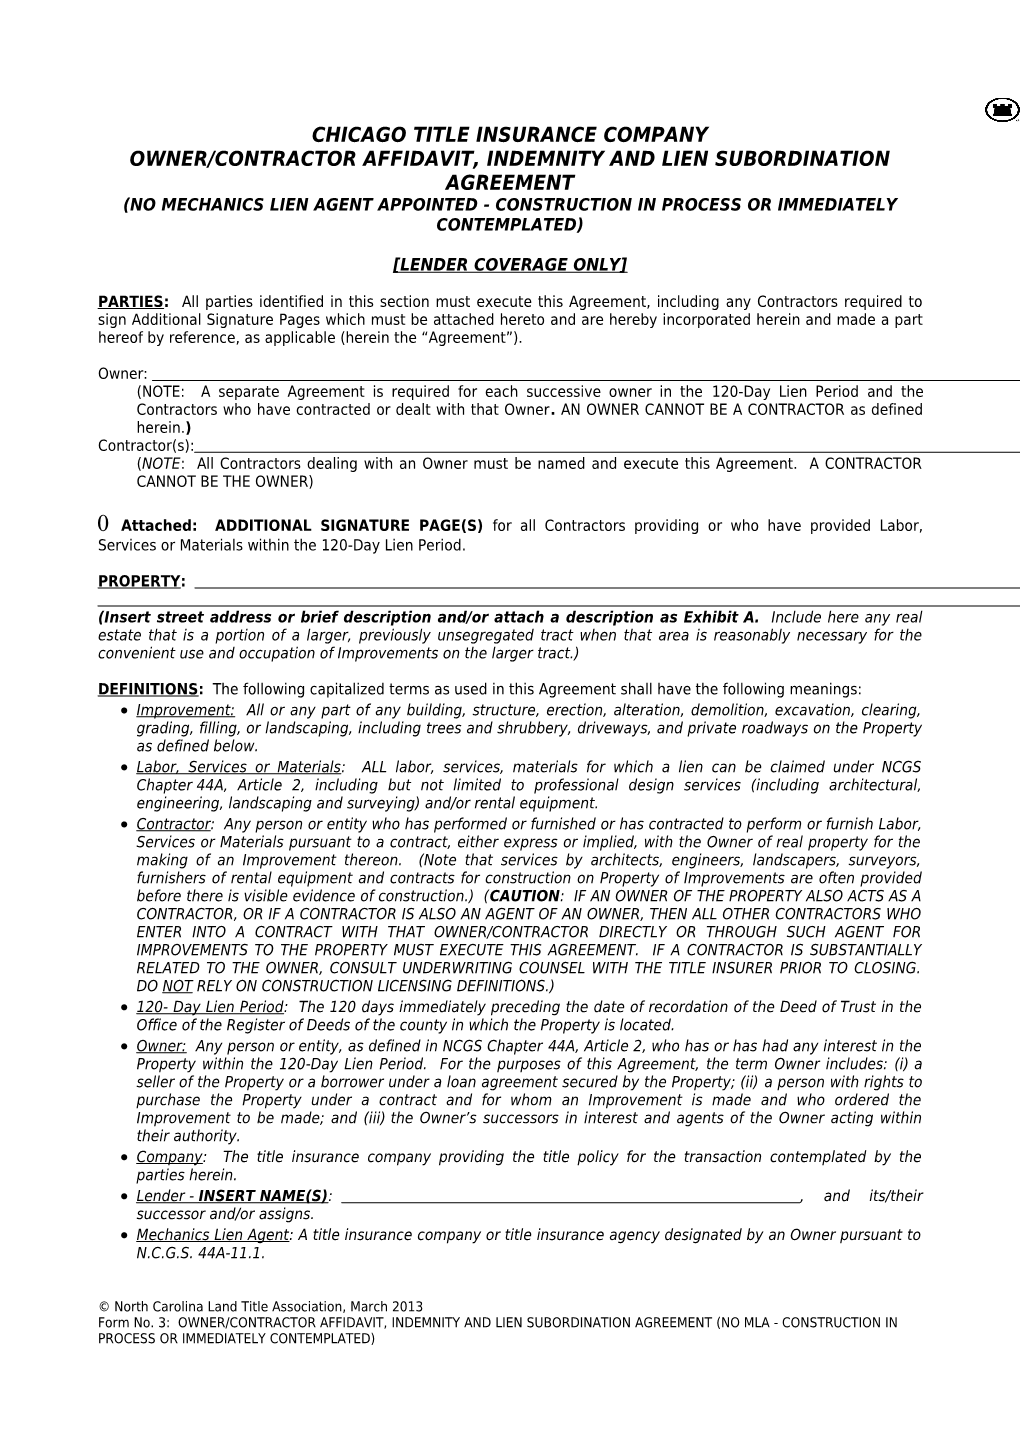 Owner-Contractor Affidavit Indemnity & Subordination Agreement